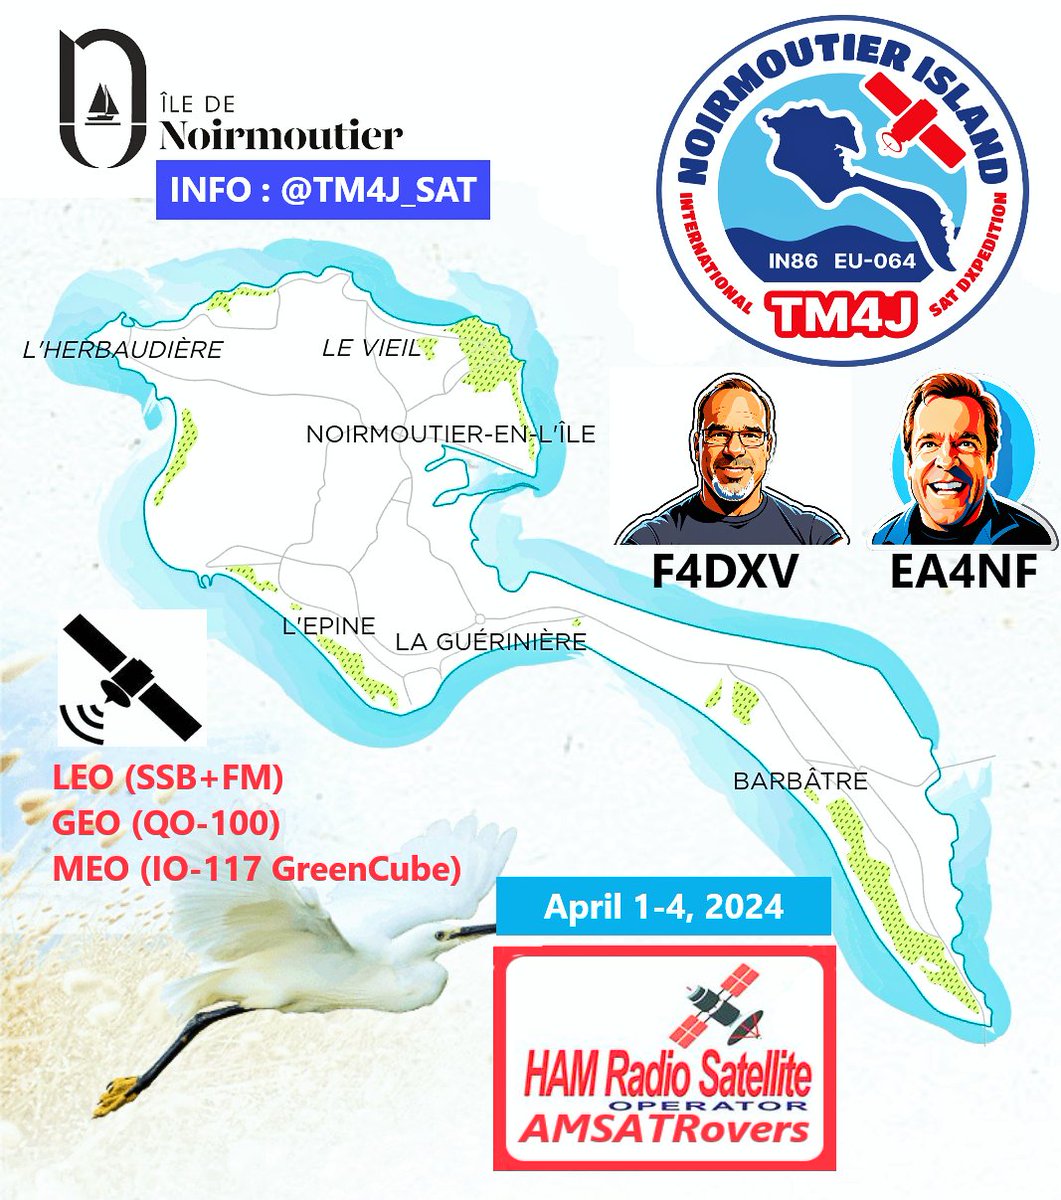 𝗦𝘁𝗮𝗿𝘁𝗶𝗻𝗴 𝘁𝗼𝗺𝗼𝗿𝗿𝗼𝘄 ❗ (𝗠𝗼𝗻𝗱𝗮𝘆 𝟭𝘀𝘁 𝗔𝗽𝗿𝗶𝗹) 👉RS-44 12h25 UTC for NA/Caribbean/SA 🎁DXCC counter : 000 @GridMasterMap @DAILYDX #AMSATRovers #amsat @k5zm_ #IOTA #QO100 #IN86 @eb1ao #DXpedition #TM4J @amsatf @AmsatSpain @ea1yo #IslandsOnTheAir @EA1CS